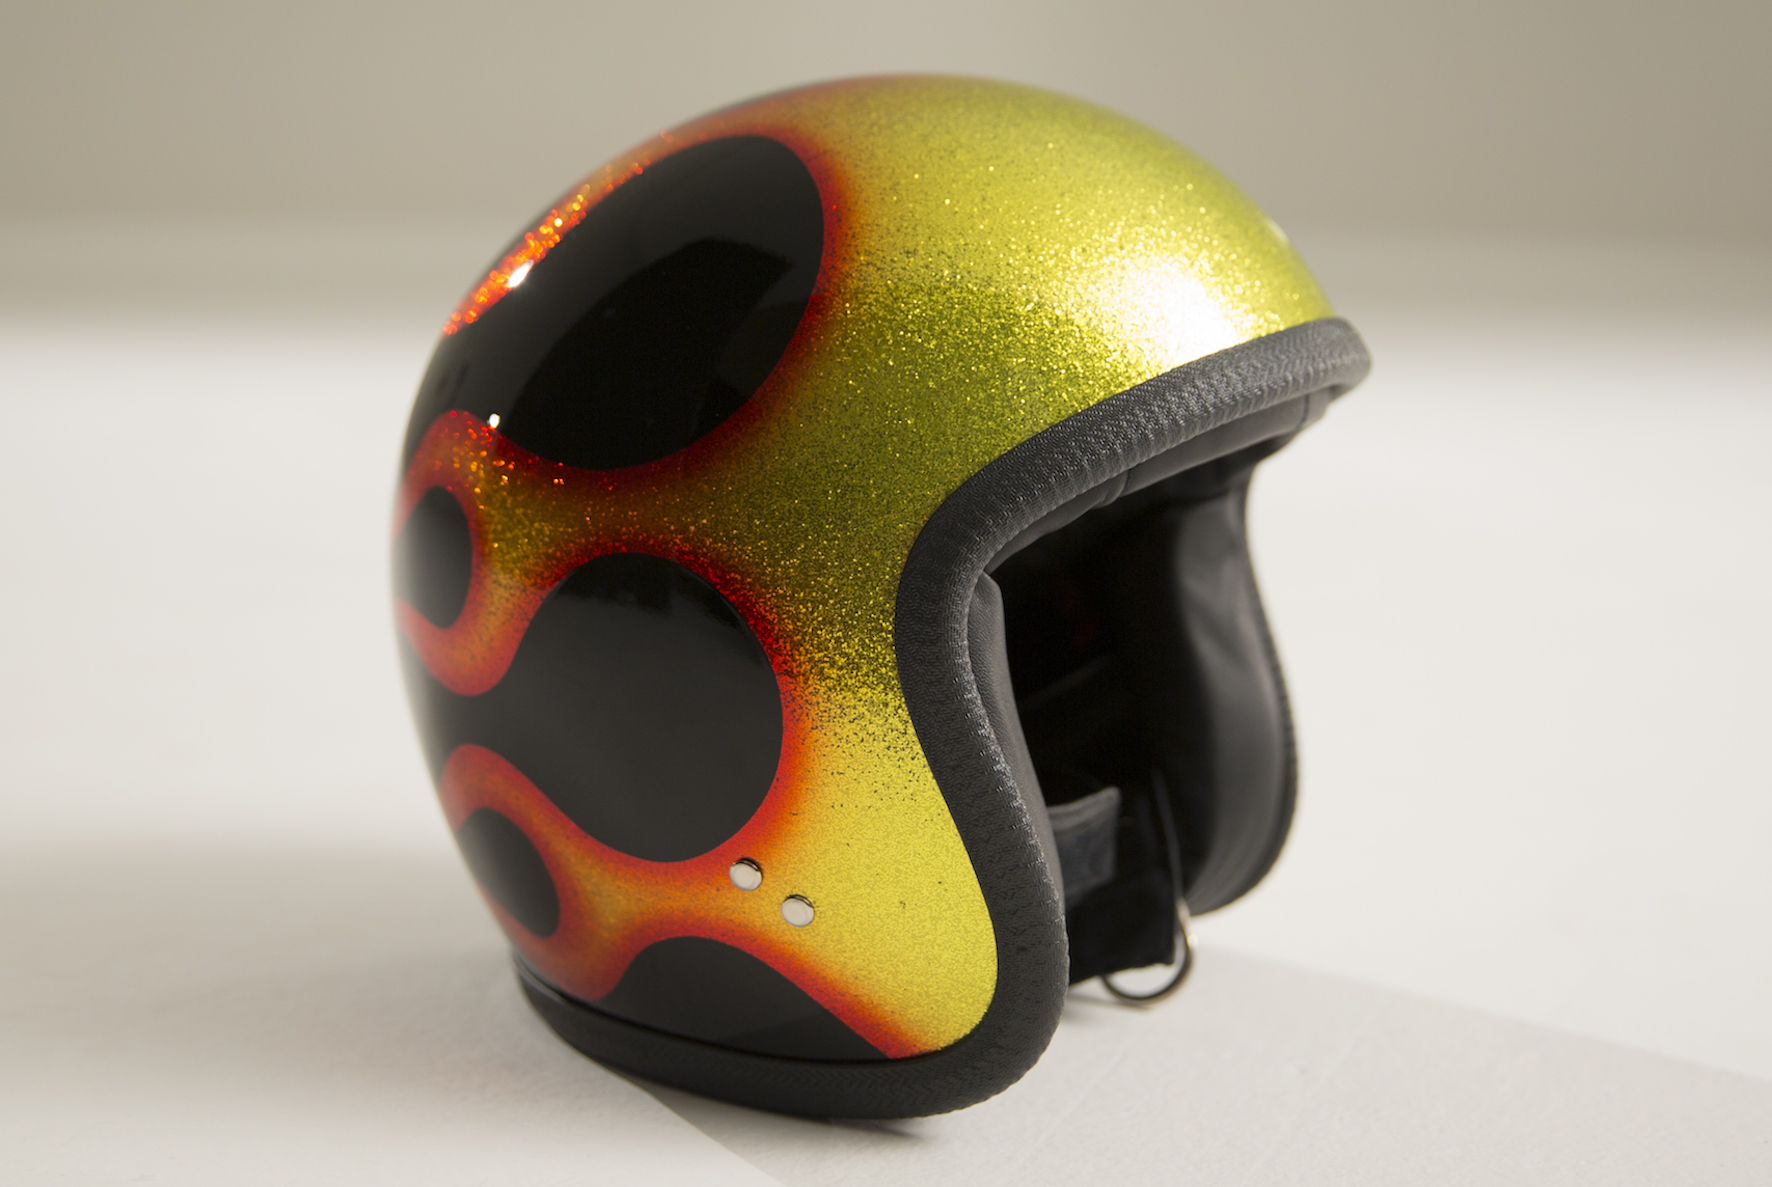 Jet style motorcycle helmet